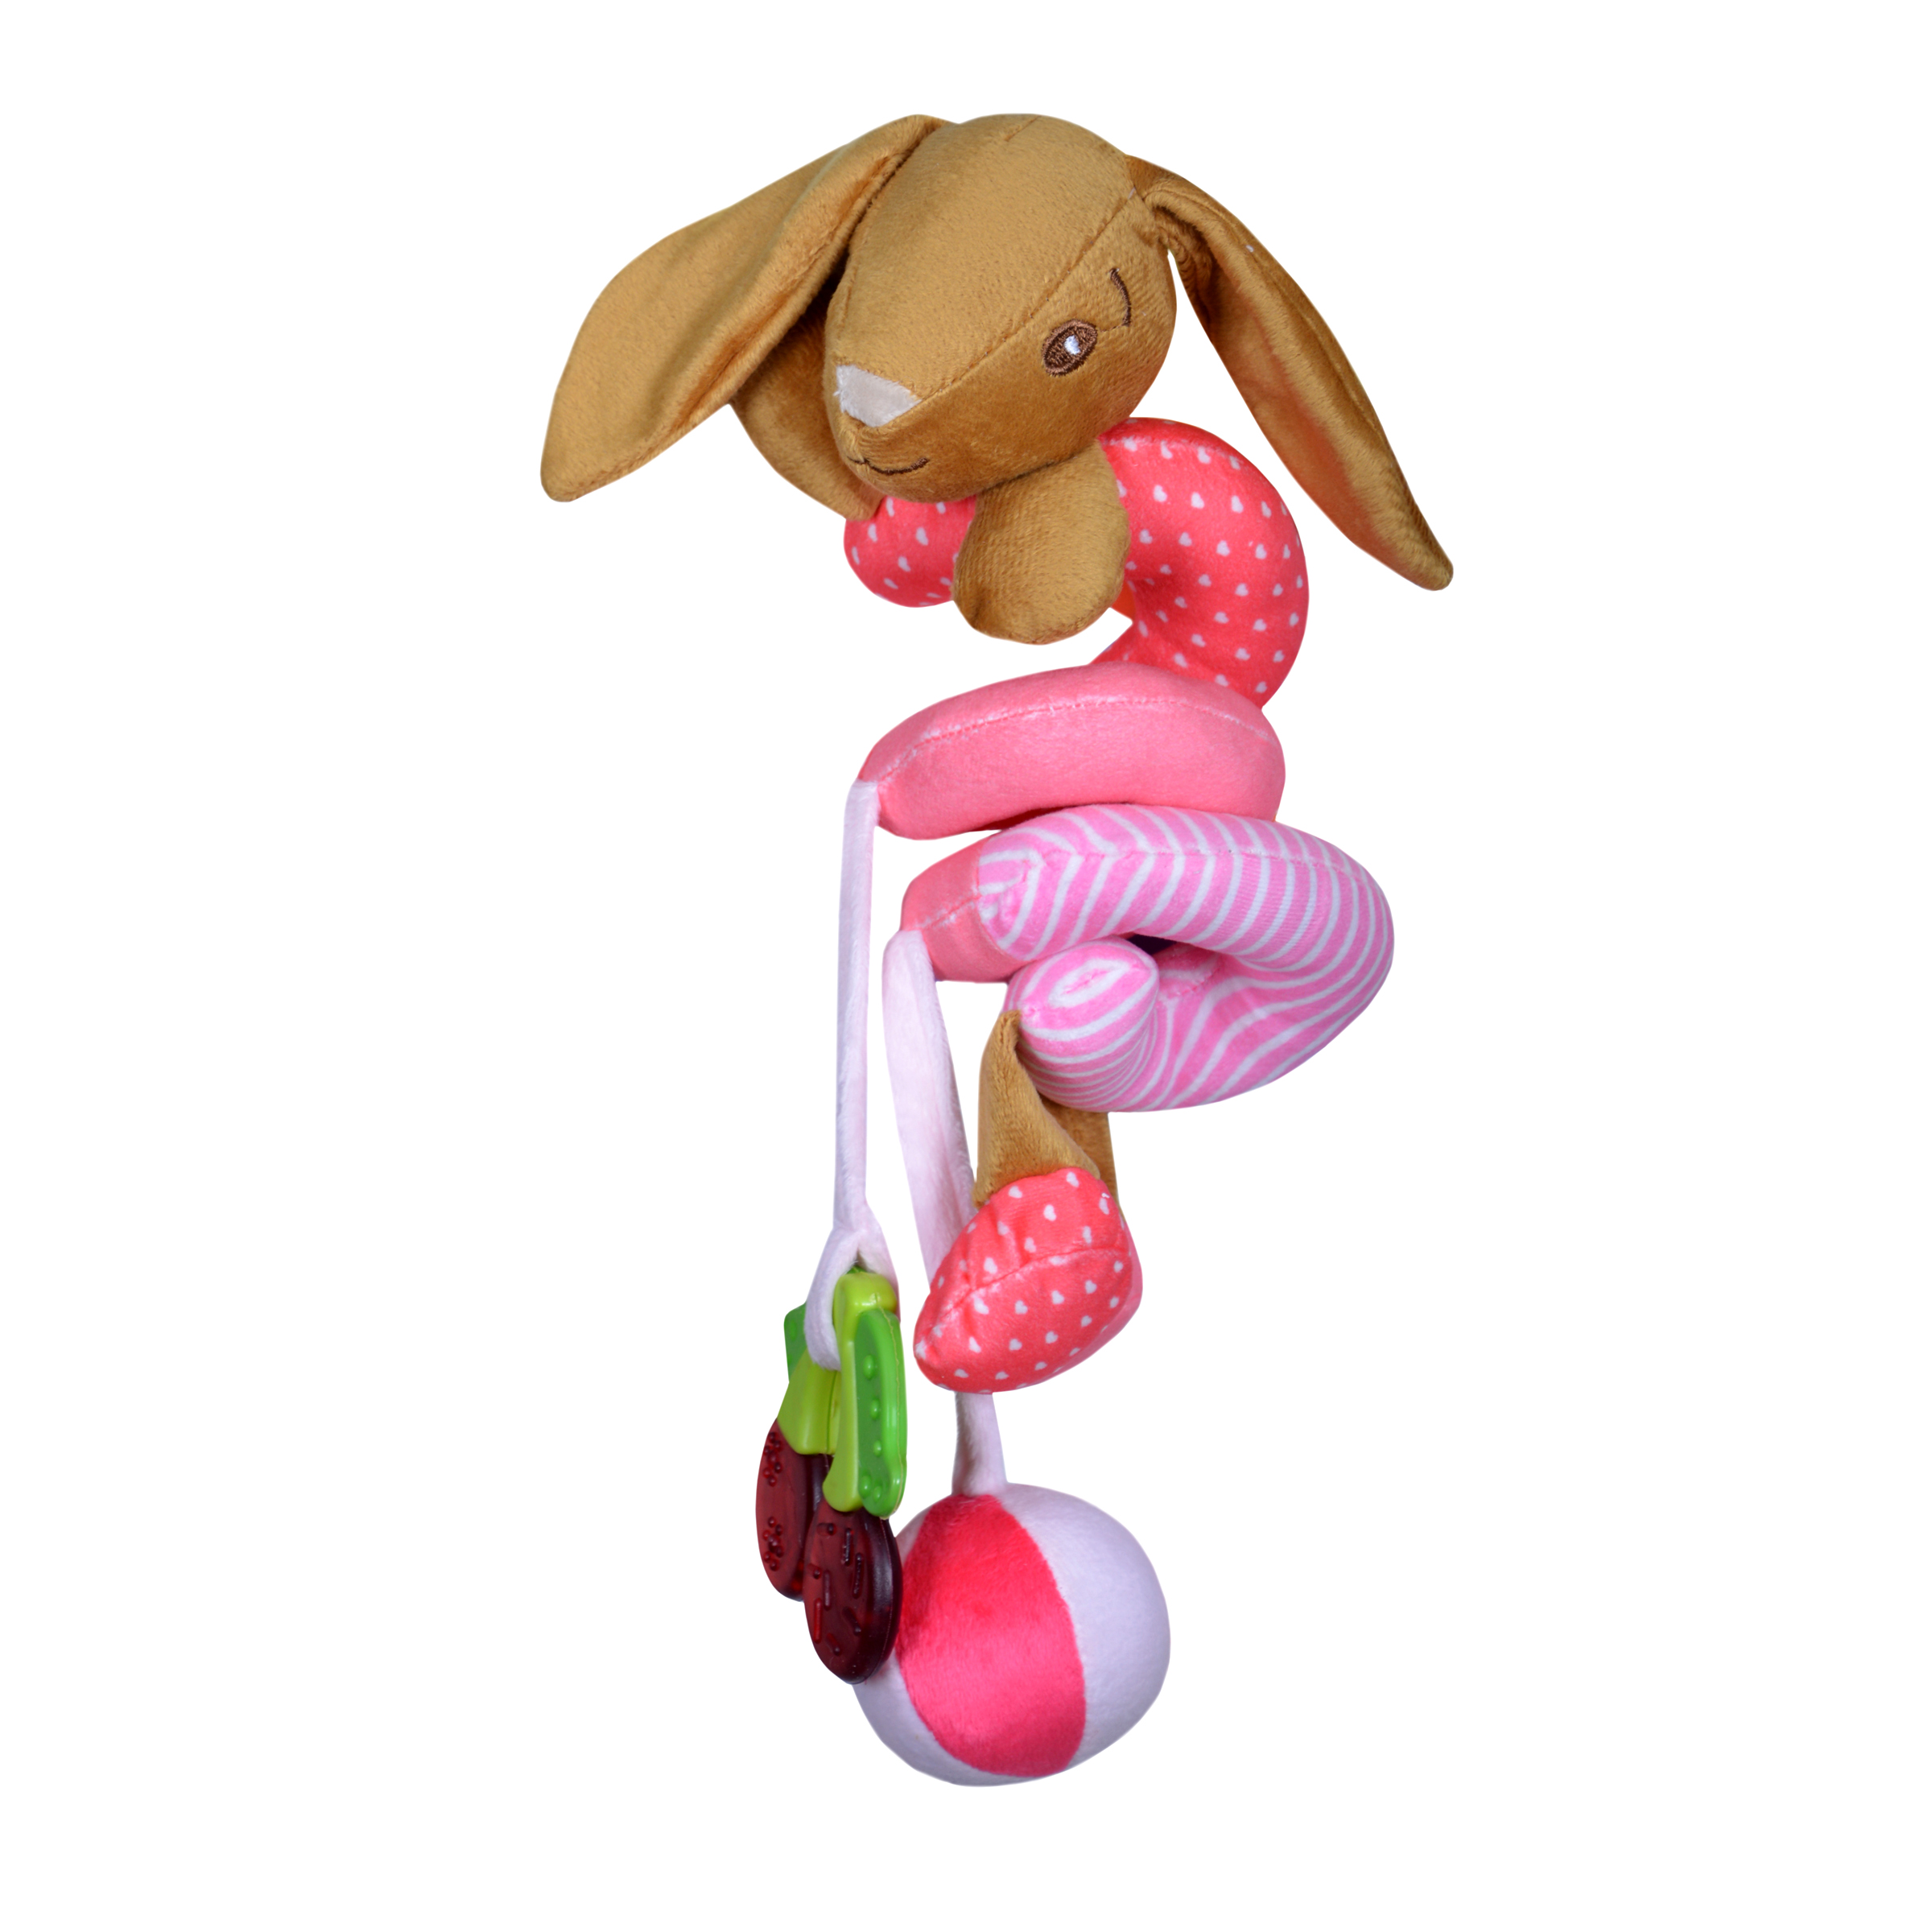 آویز تخت کودک طرح خرگوش بازیگوش مدل S